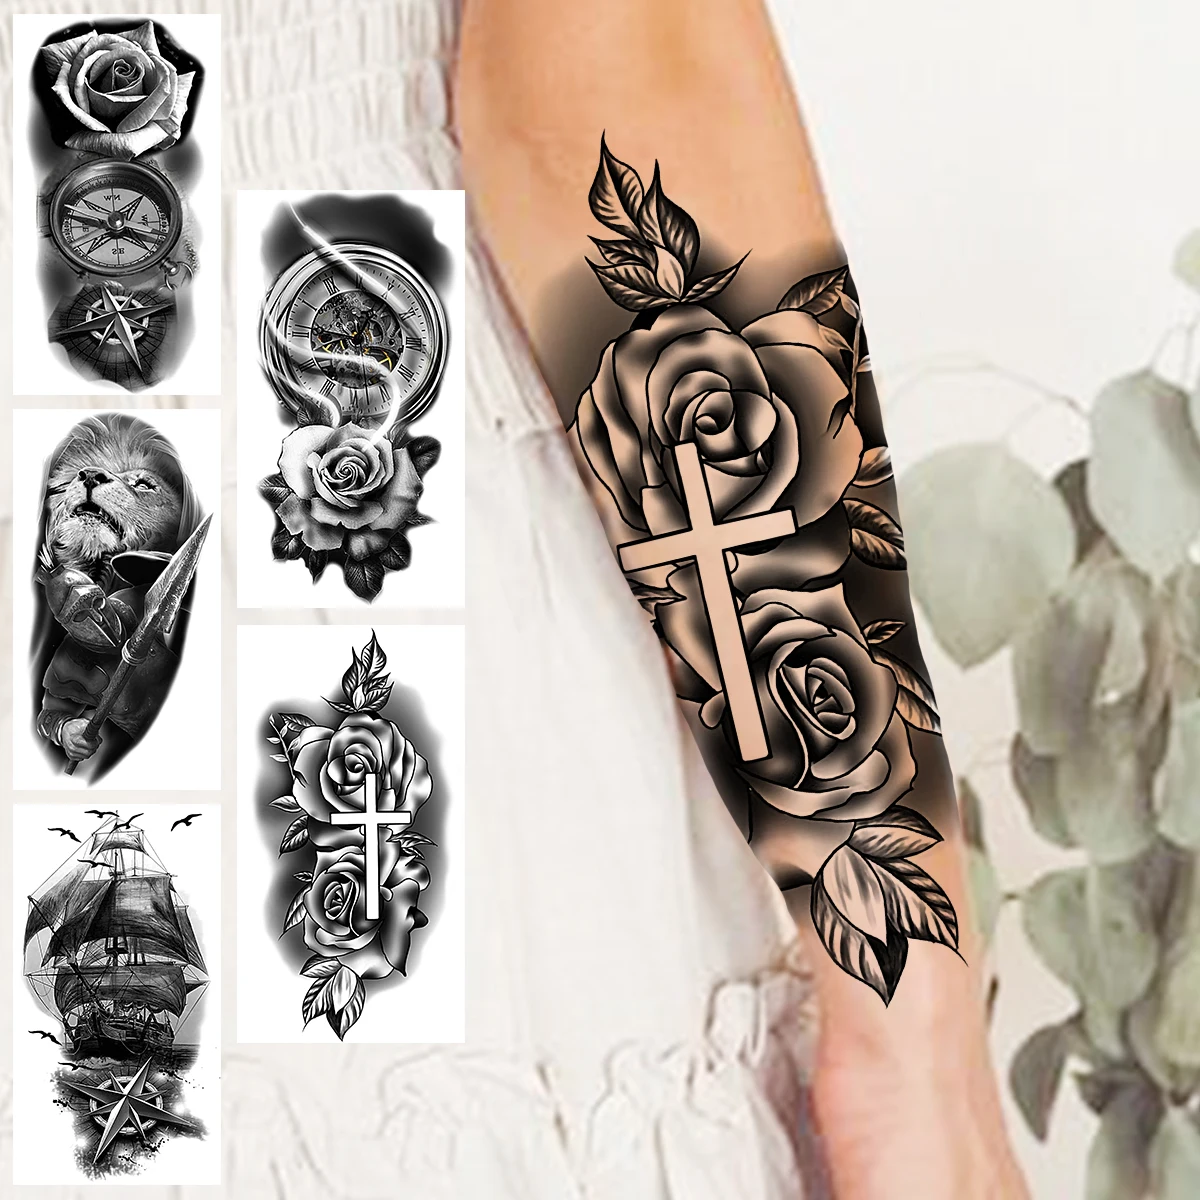 

Rose Flower Cross Temporary Tattoos For Women Adults Realistic Lion Samurai Pirate Ship Compass Fake Tattoo Sticker Arm Tatoos